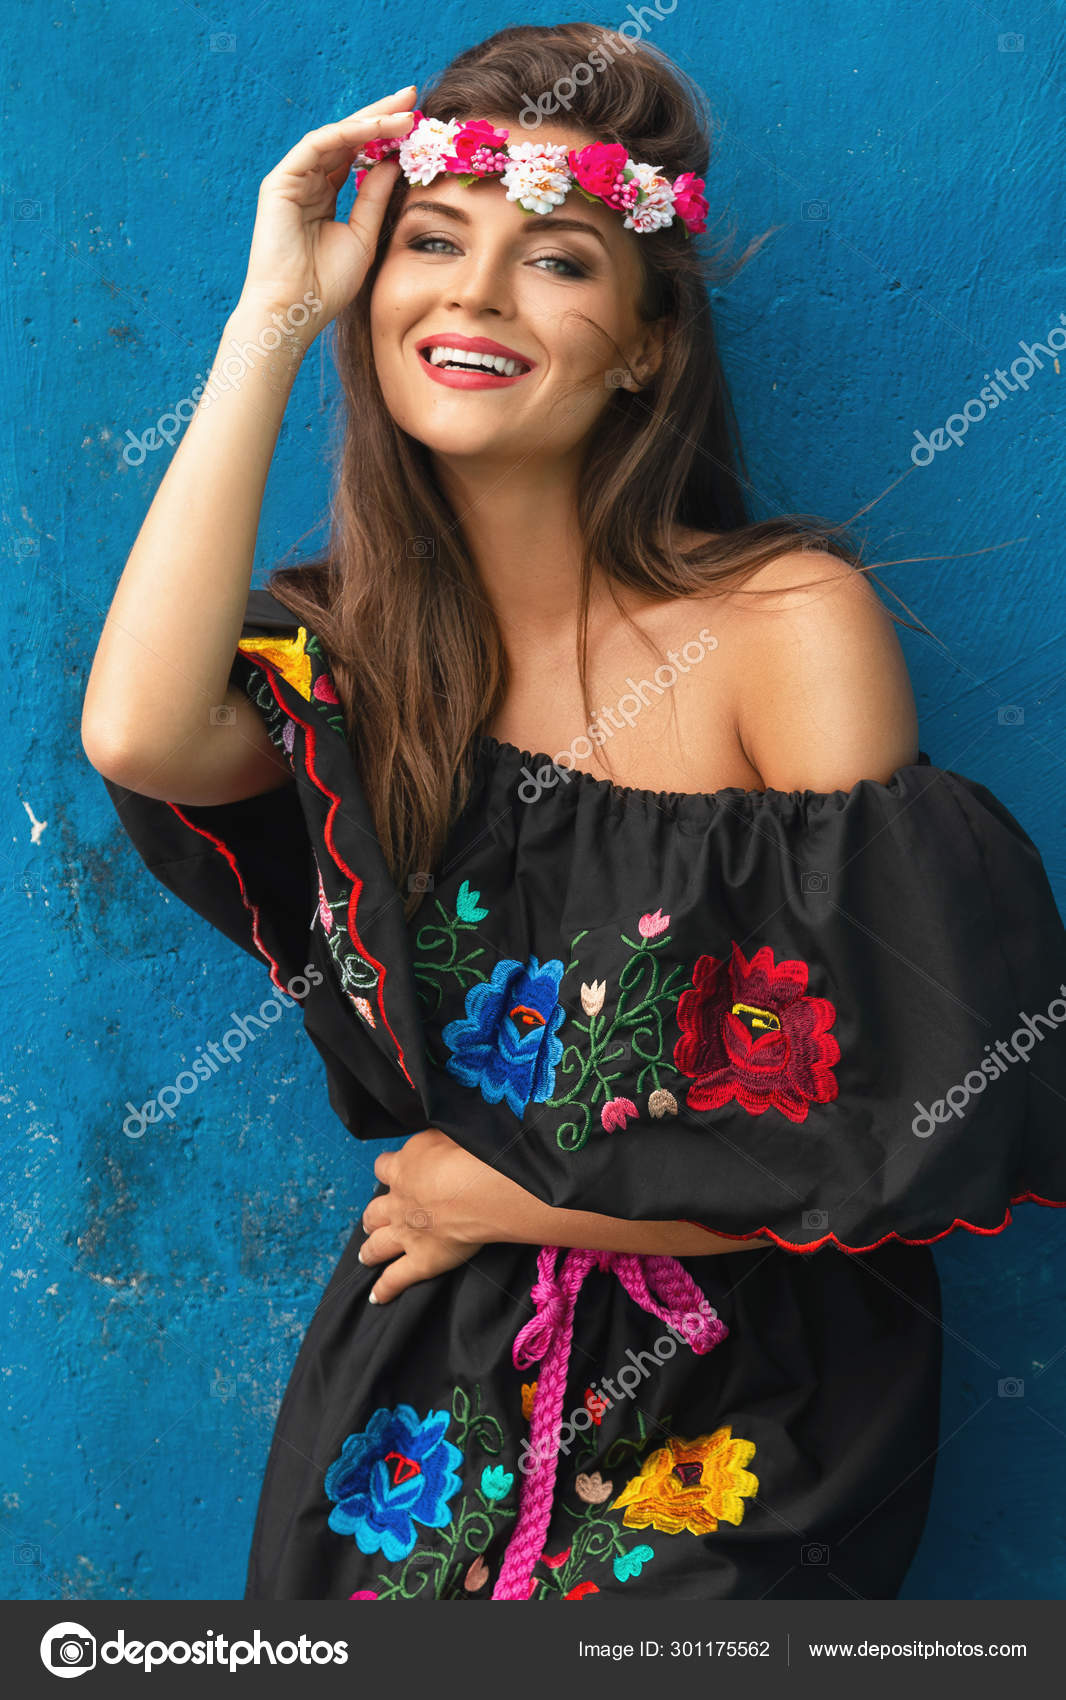 https://st4.depositphotos.com/2060347/30117/i/1600/depositphotos_301175562-stock-photo-young-beautiful-woman-wearing-traditional.jpg